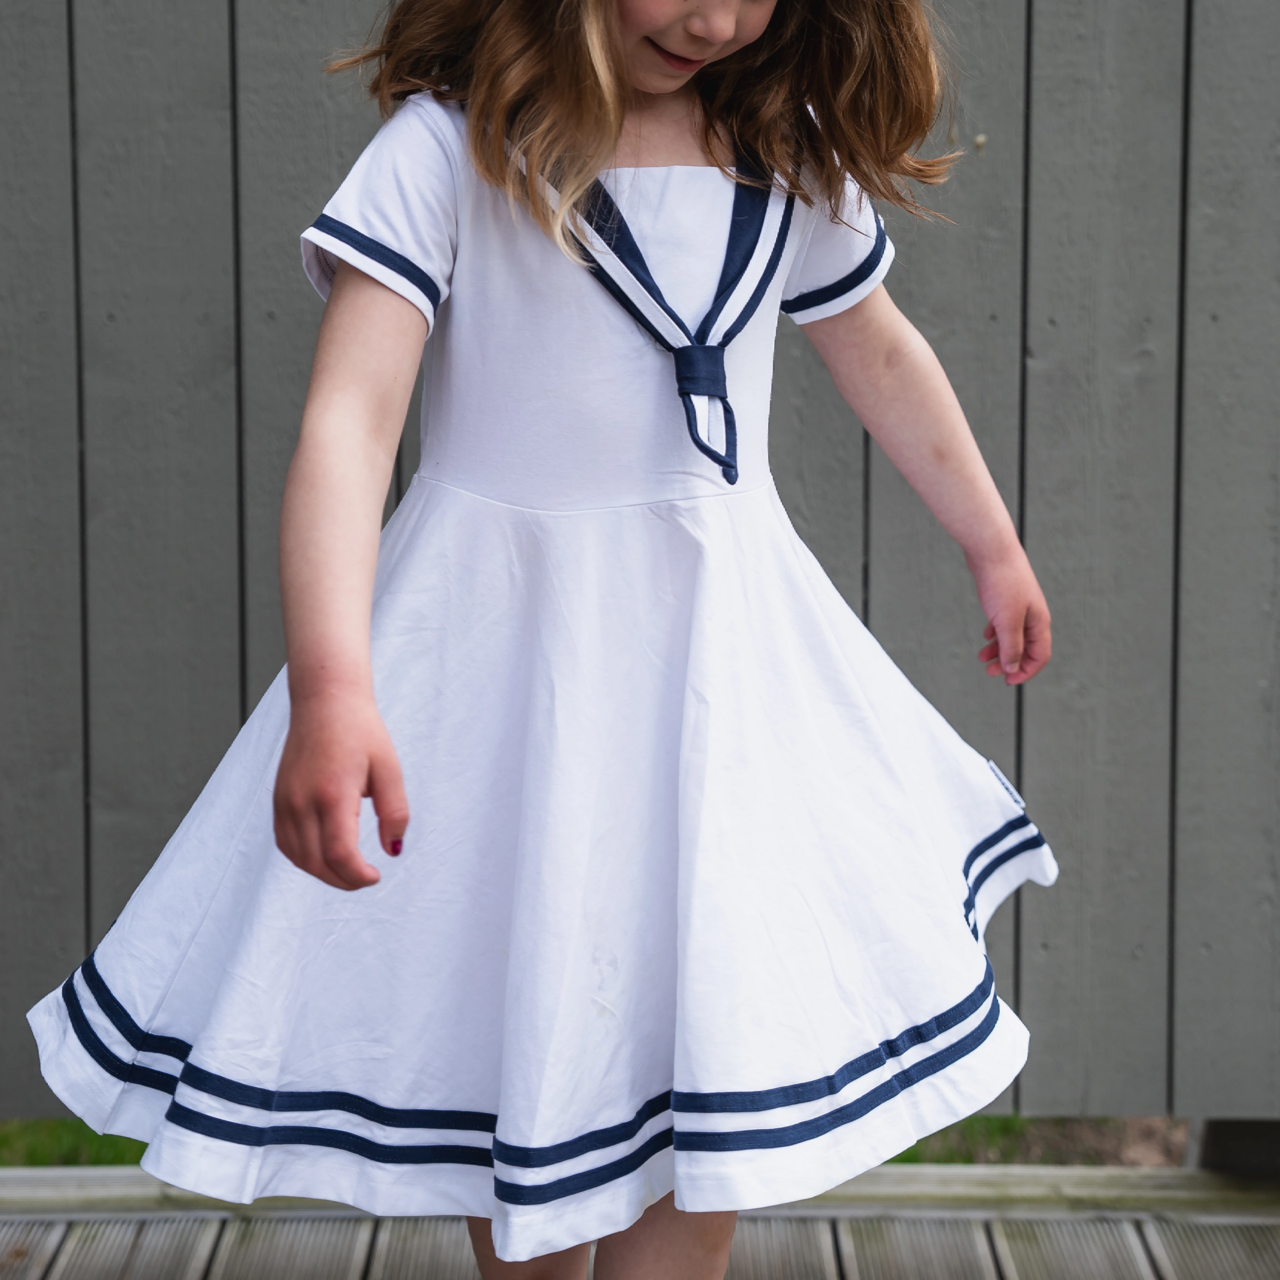 Sailor dress White 74/80